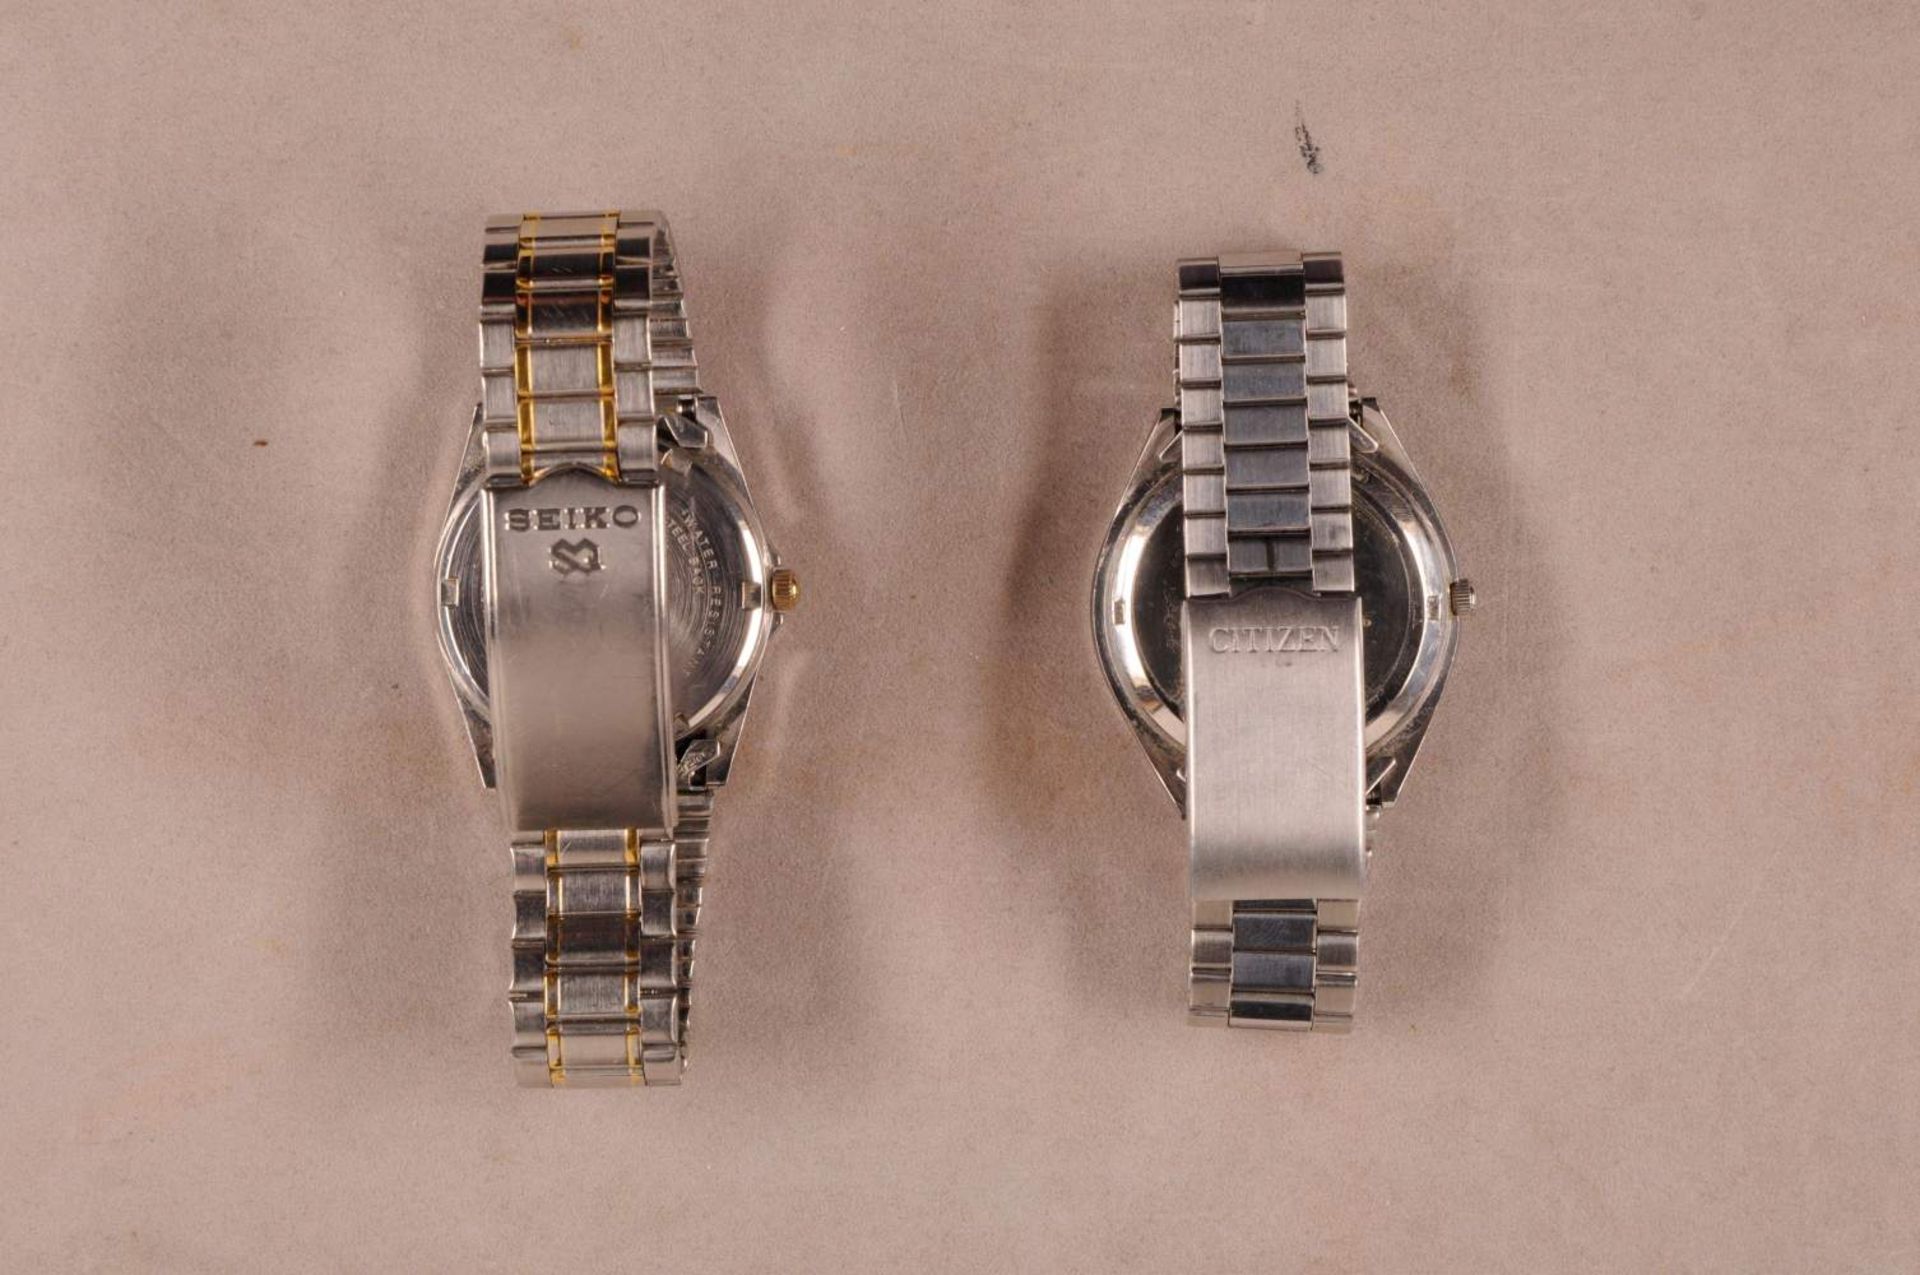 Lot 7 Armbanduhren Edelstahl/Metall/Kunststoff, tlw. vergoldet, bestehend aus: Seiko, Citizen, - Bild 9 aus 10